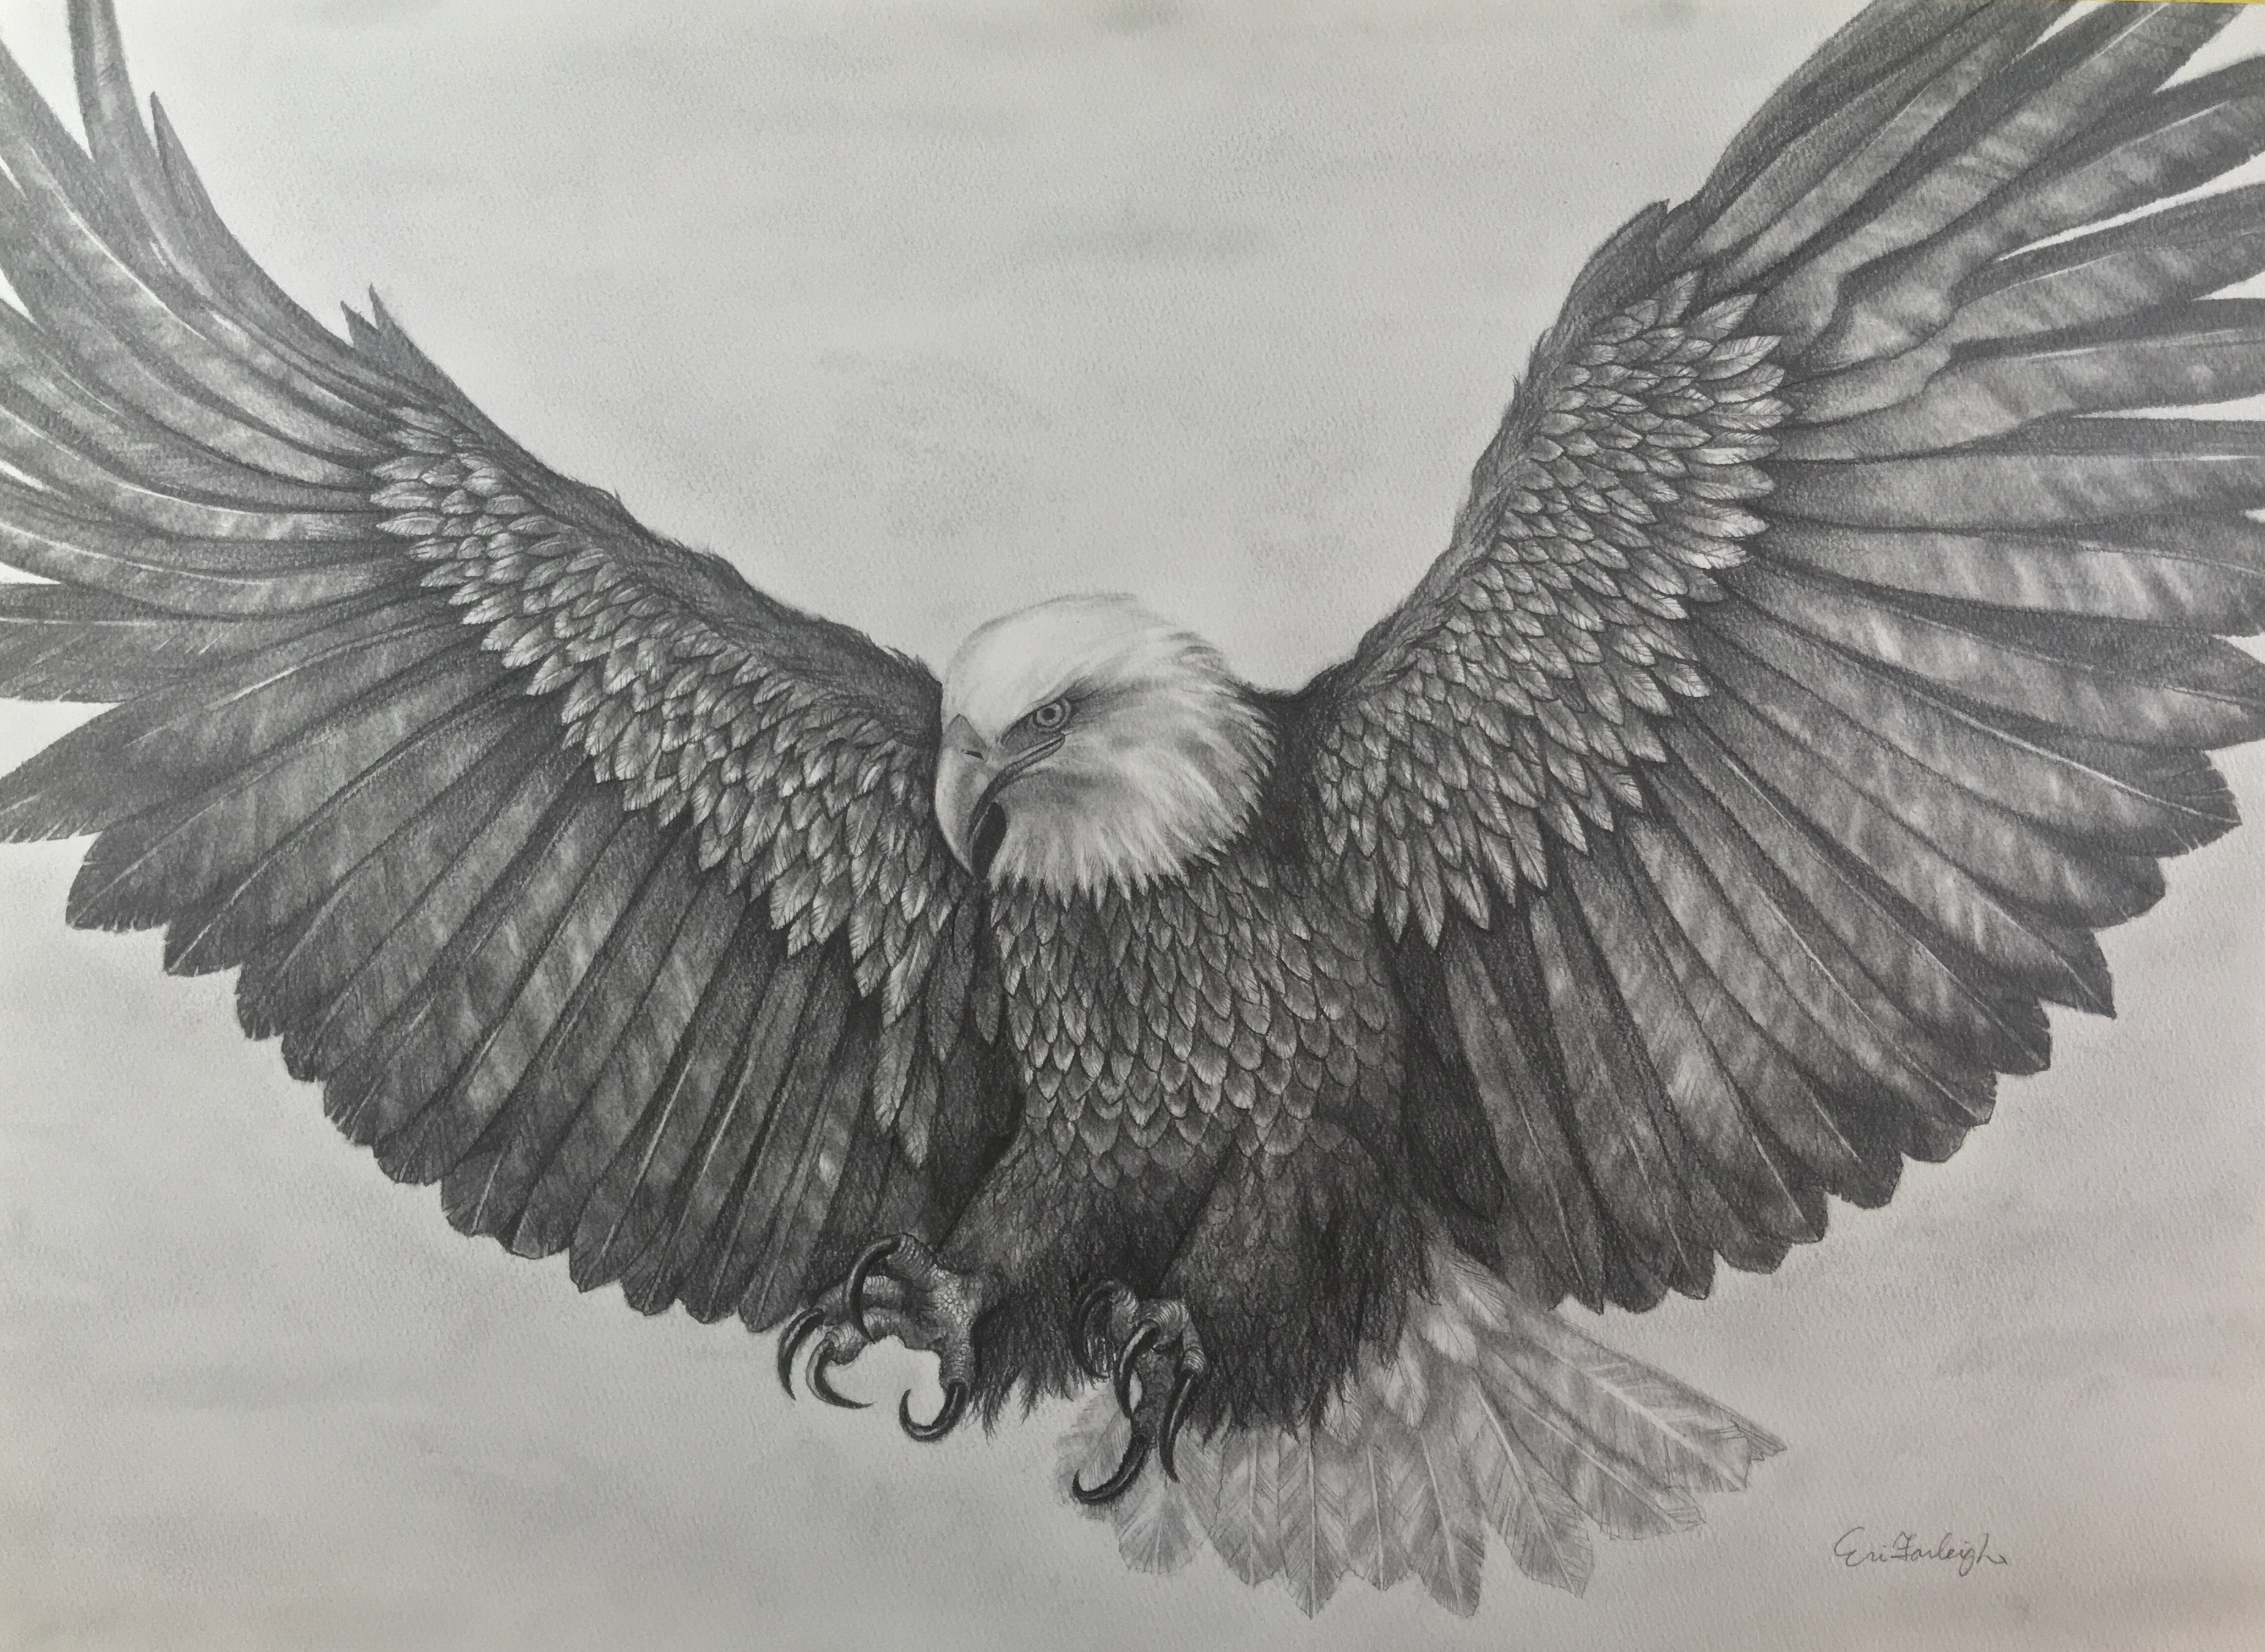 Flying Eagle アート インテリア絵画の通販 販売サイト Thisisgallery ディスイズギャラリー